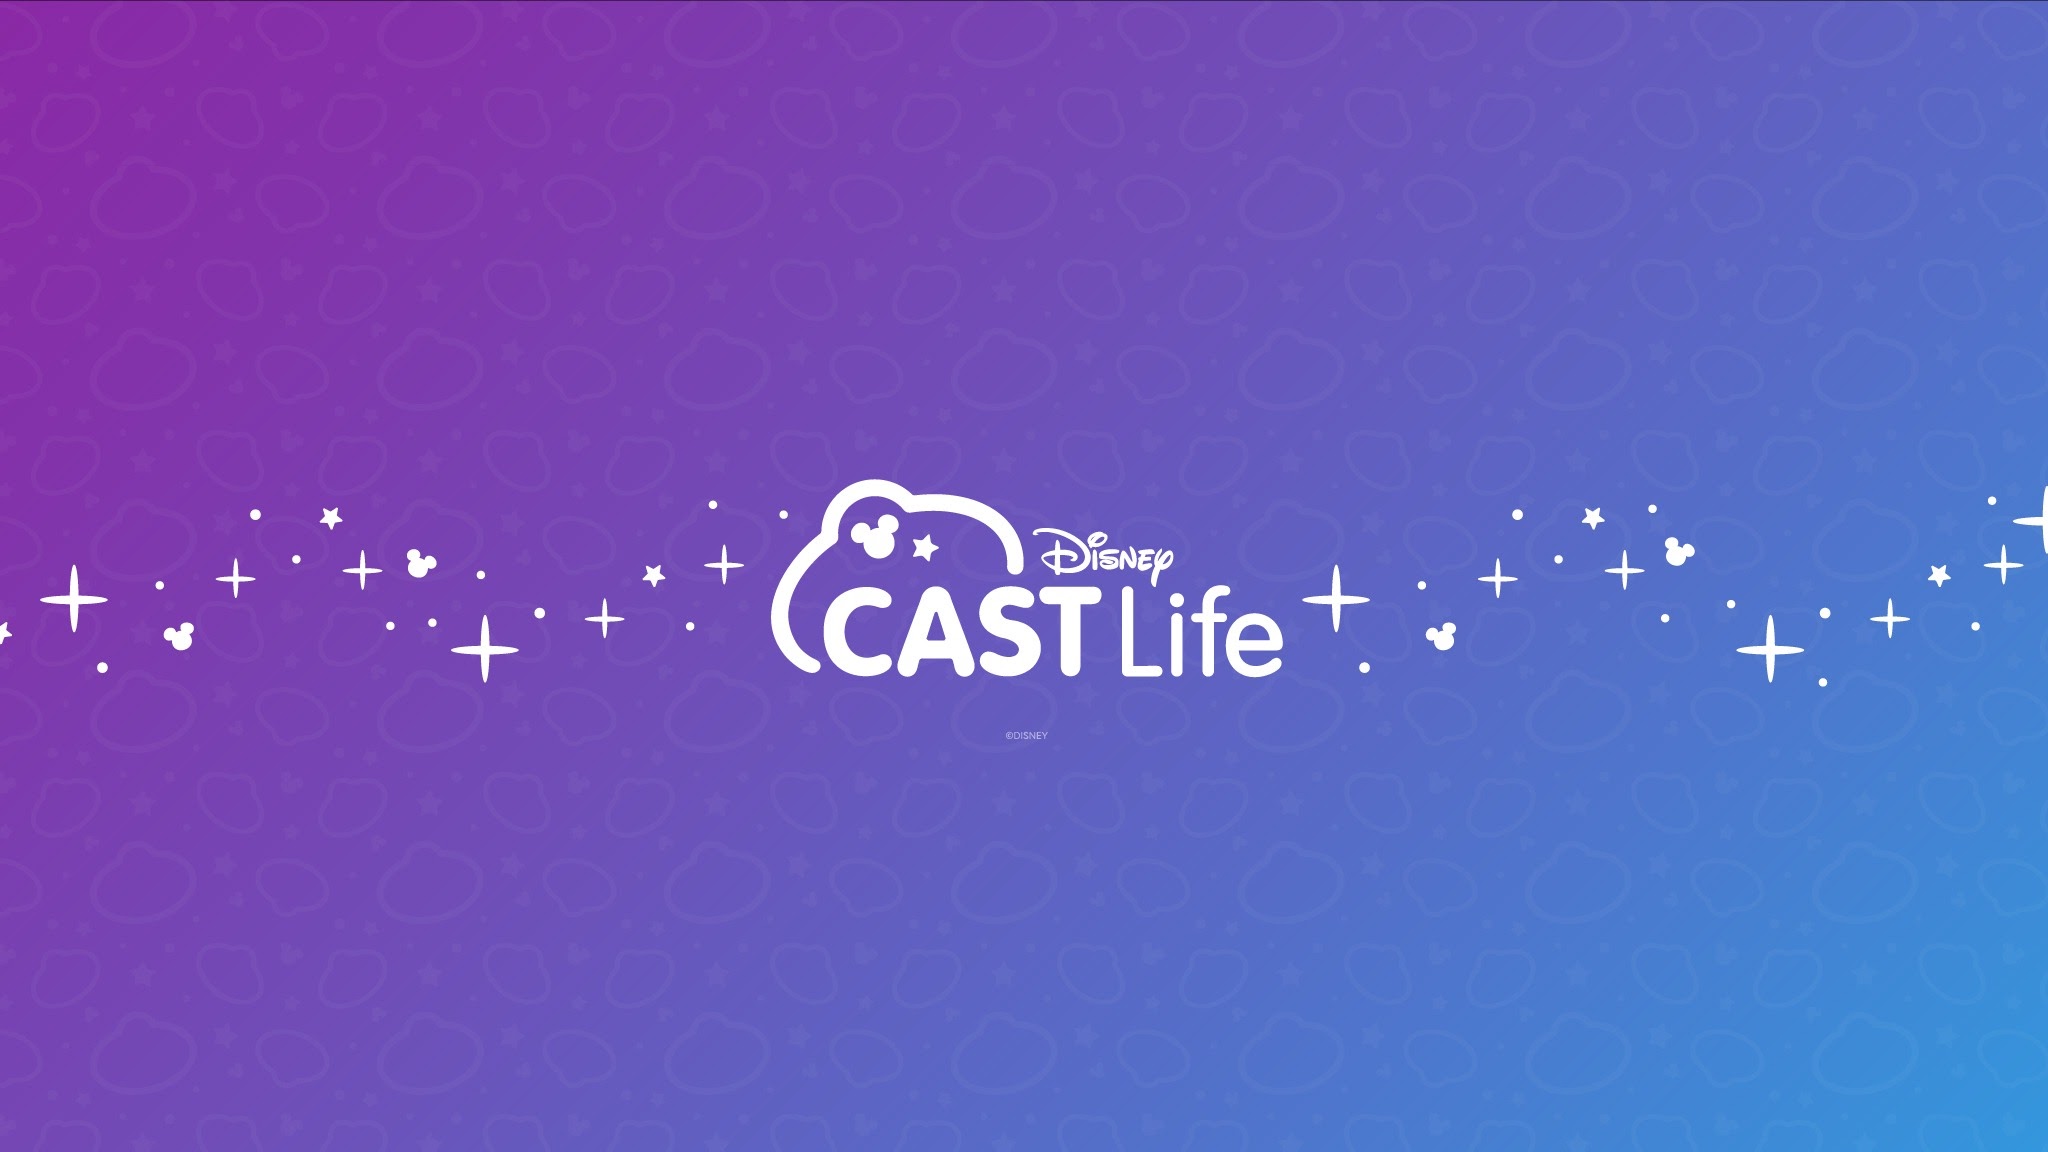 Disney Cast Life YouTube banner